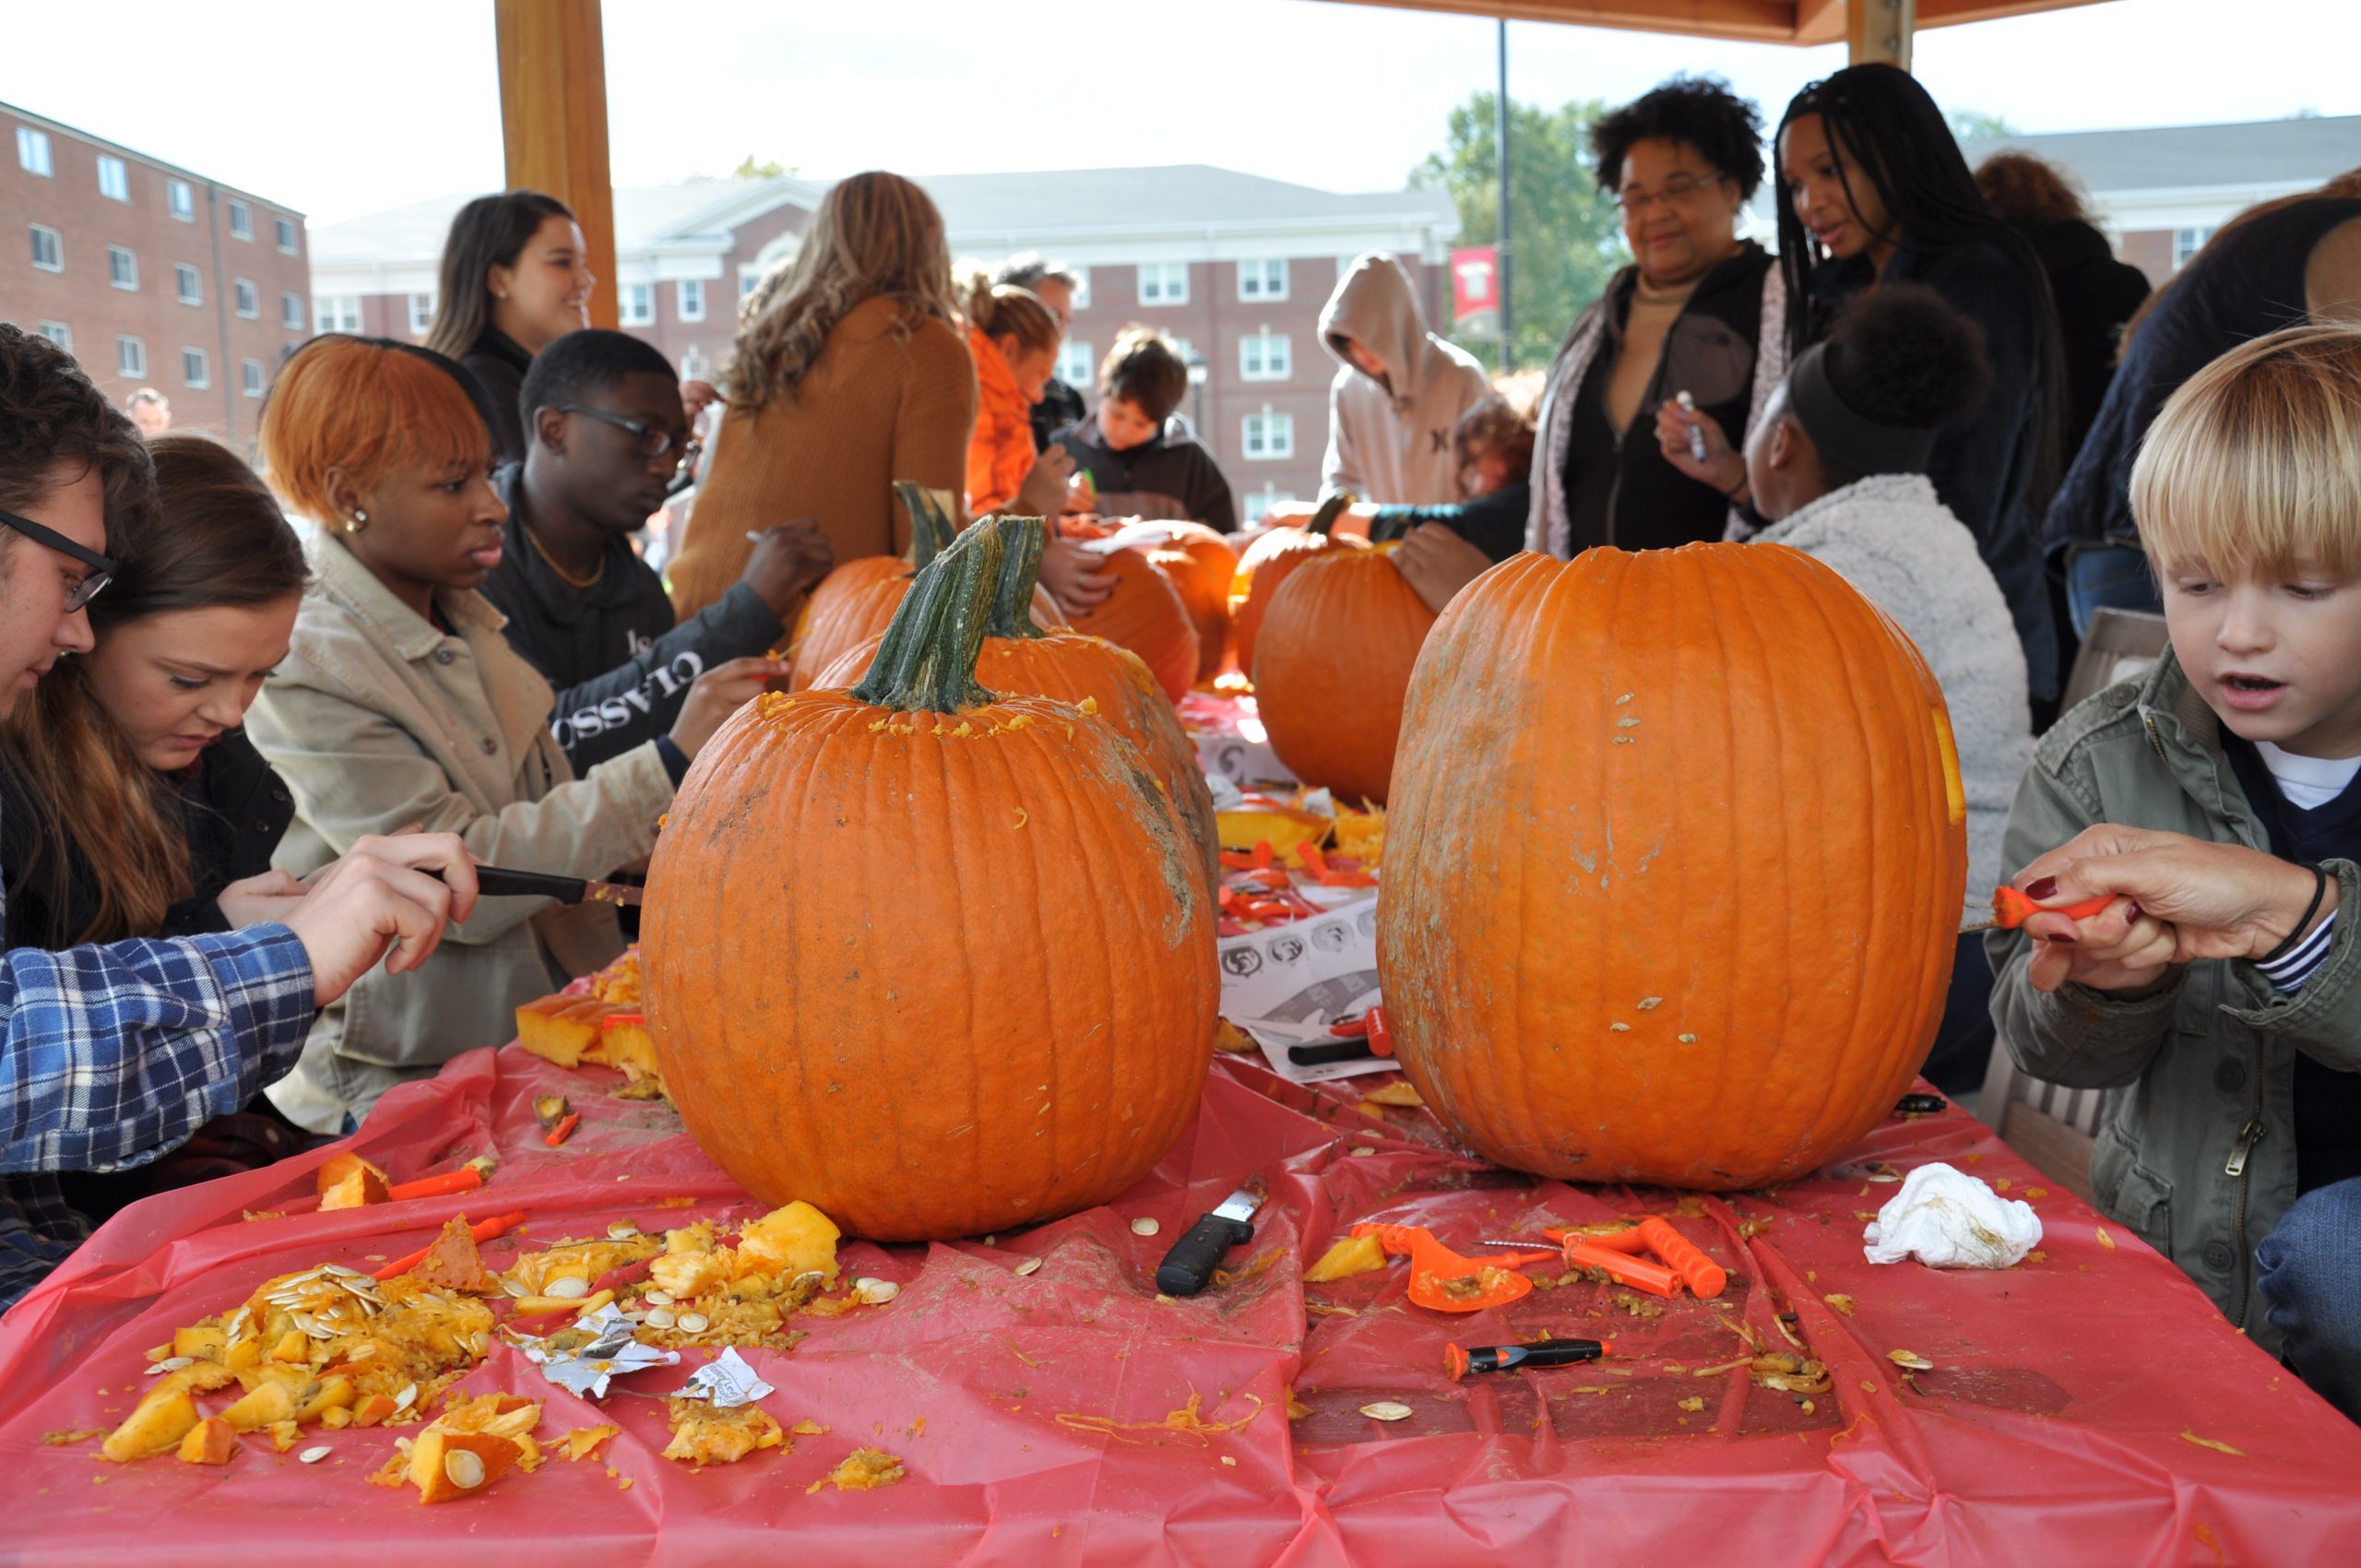 End of October brings families, alumni and pumpkins to Transylvania’s campus